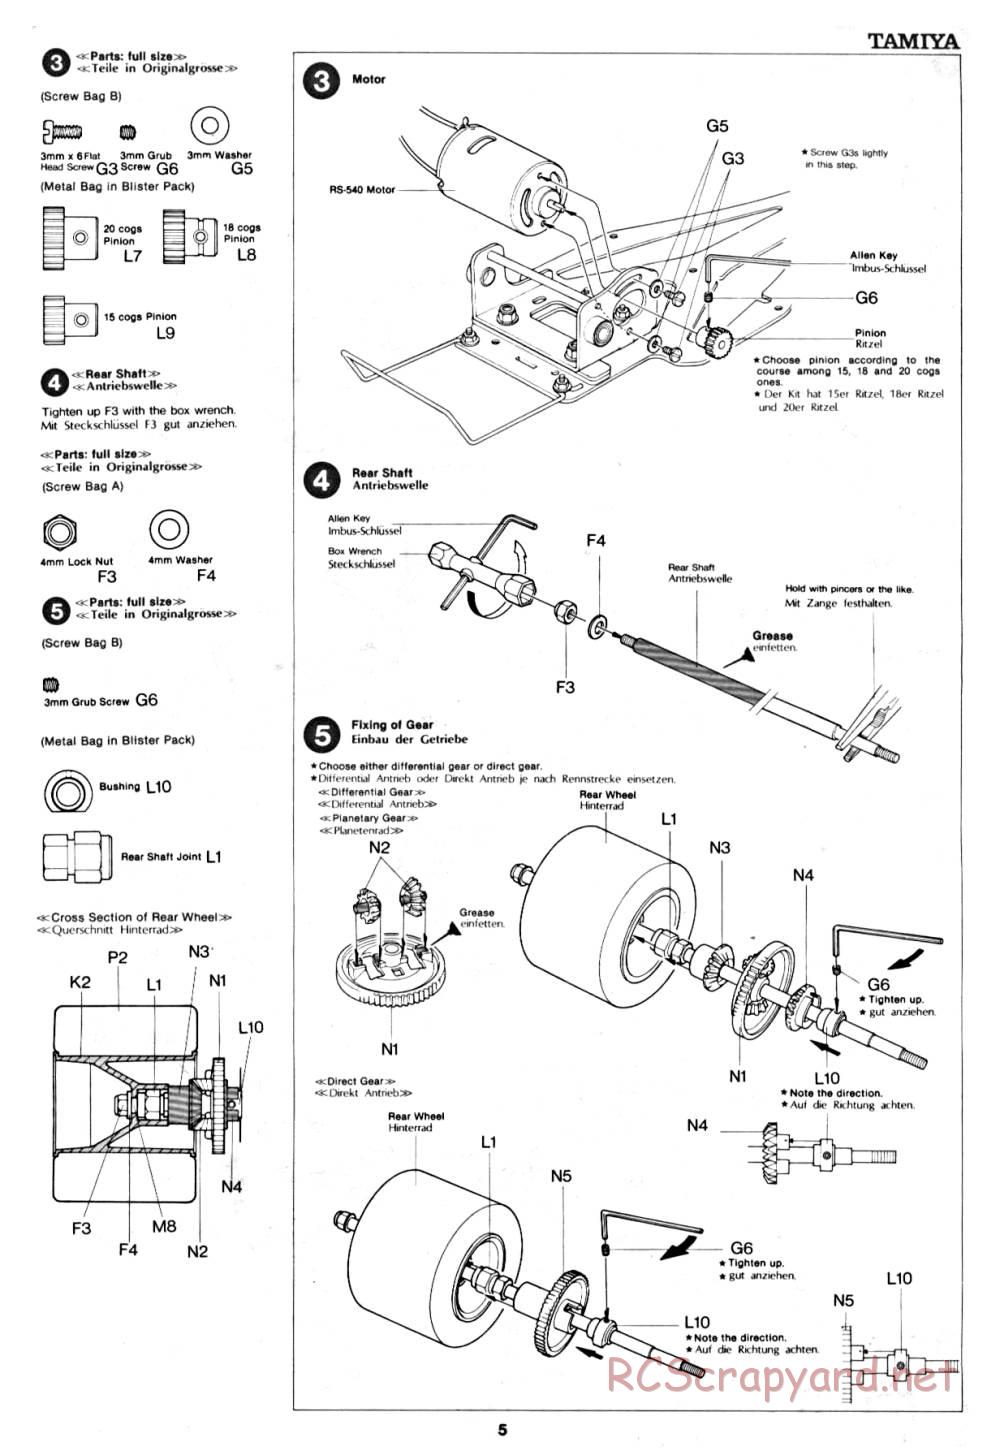 Tamiya - Williams FW-07 (CS) - 58019 - Manual - Page 5